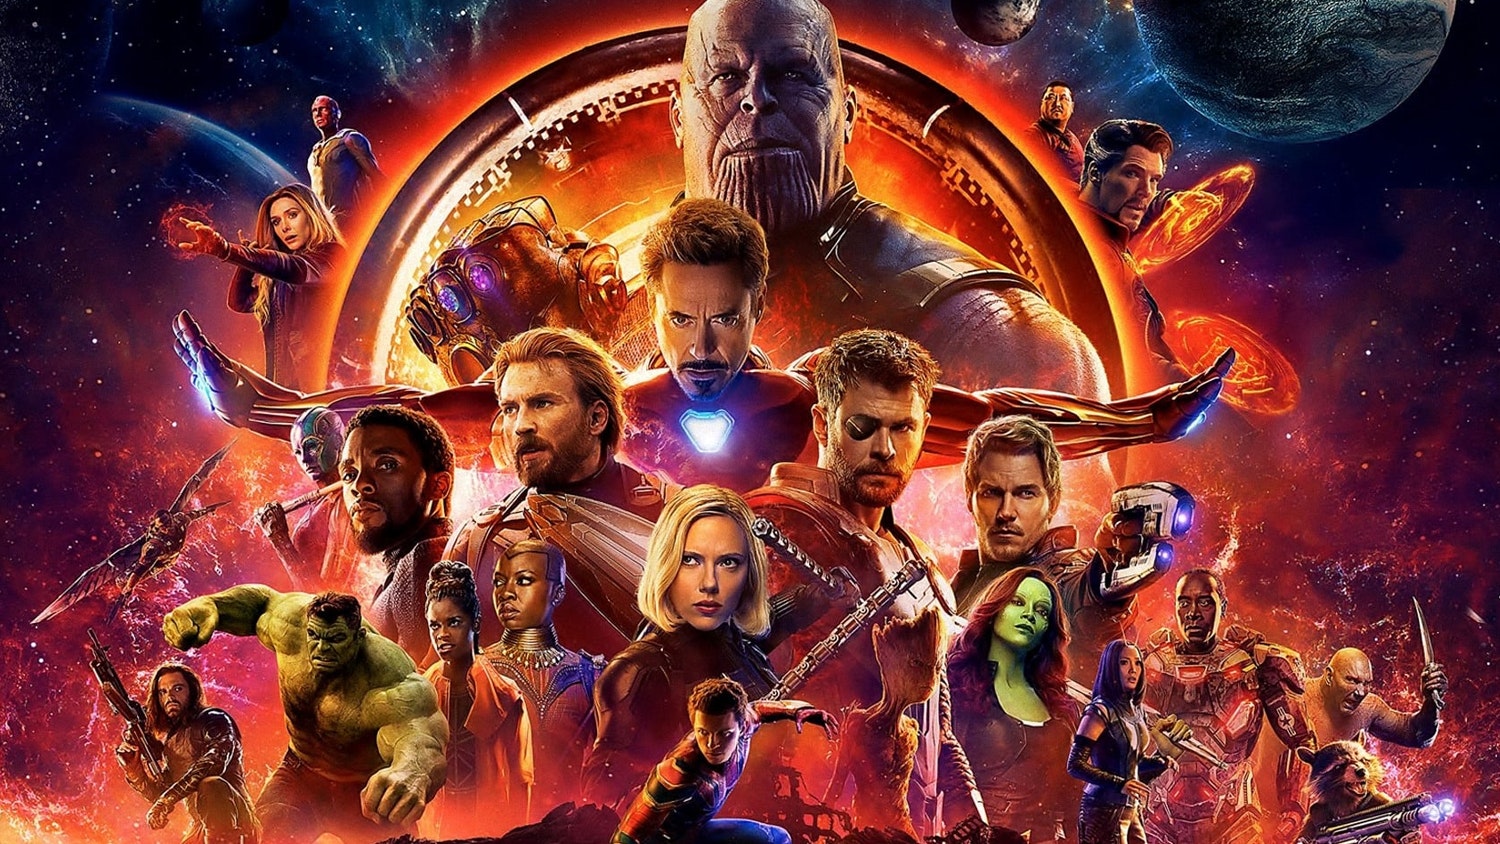 Avengers: Endgame': Every Marvel MCU film explained in one